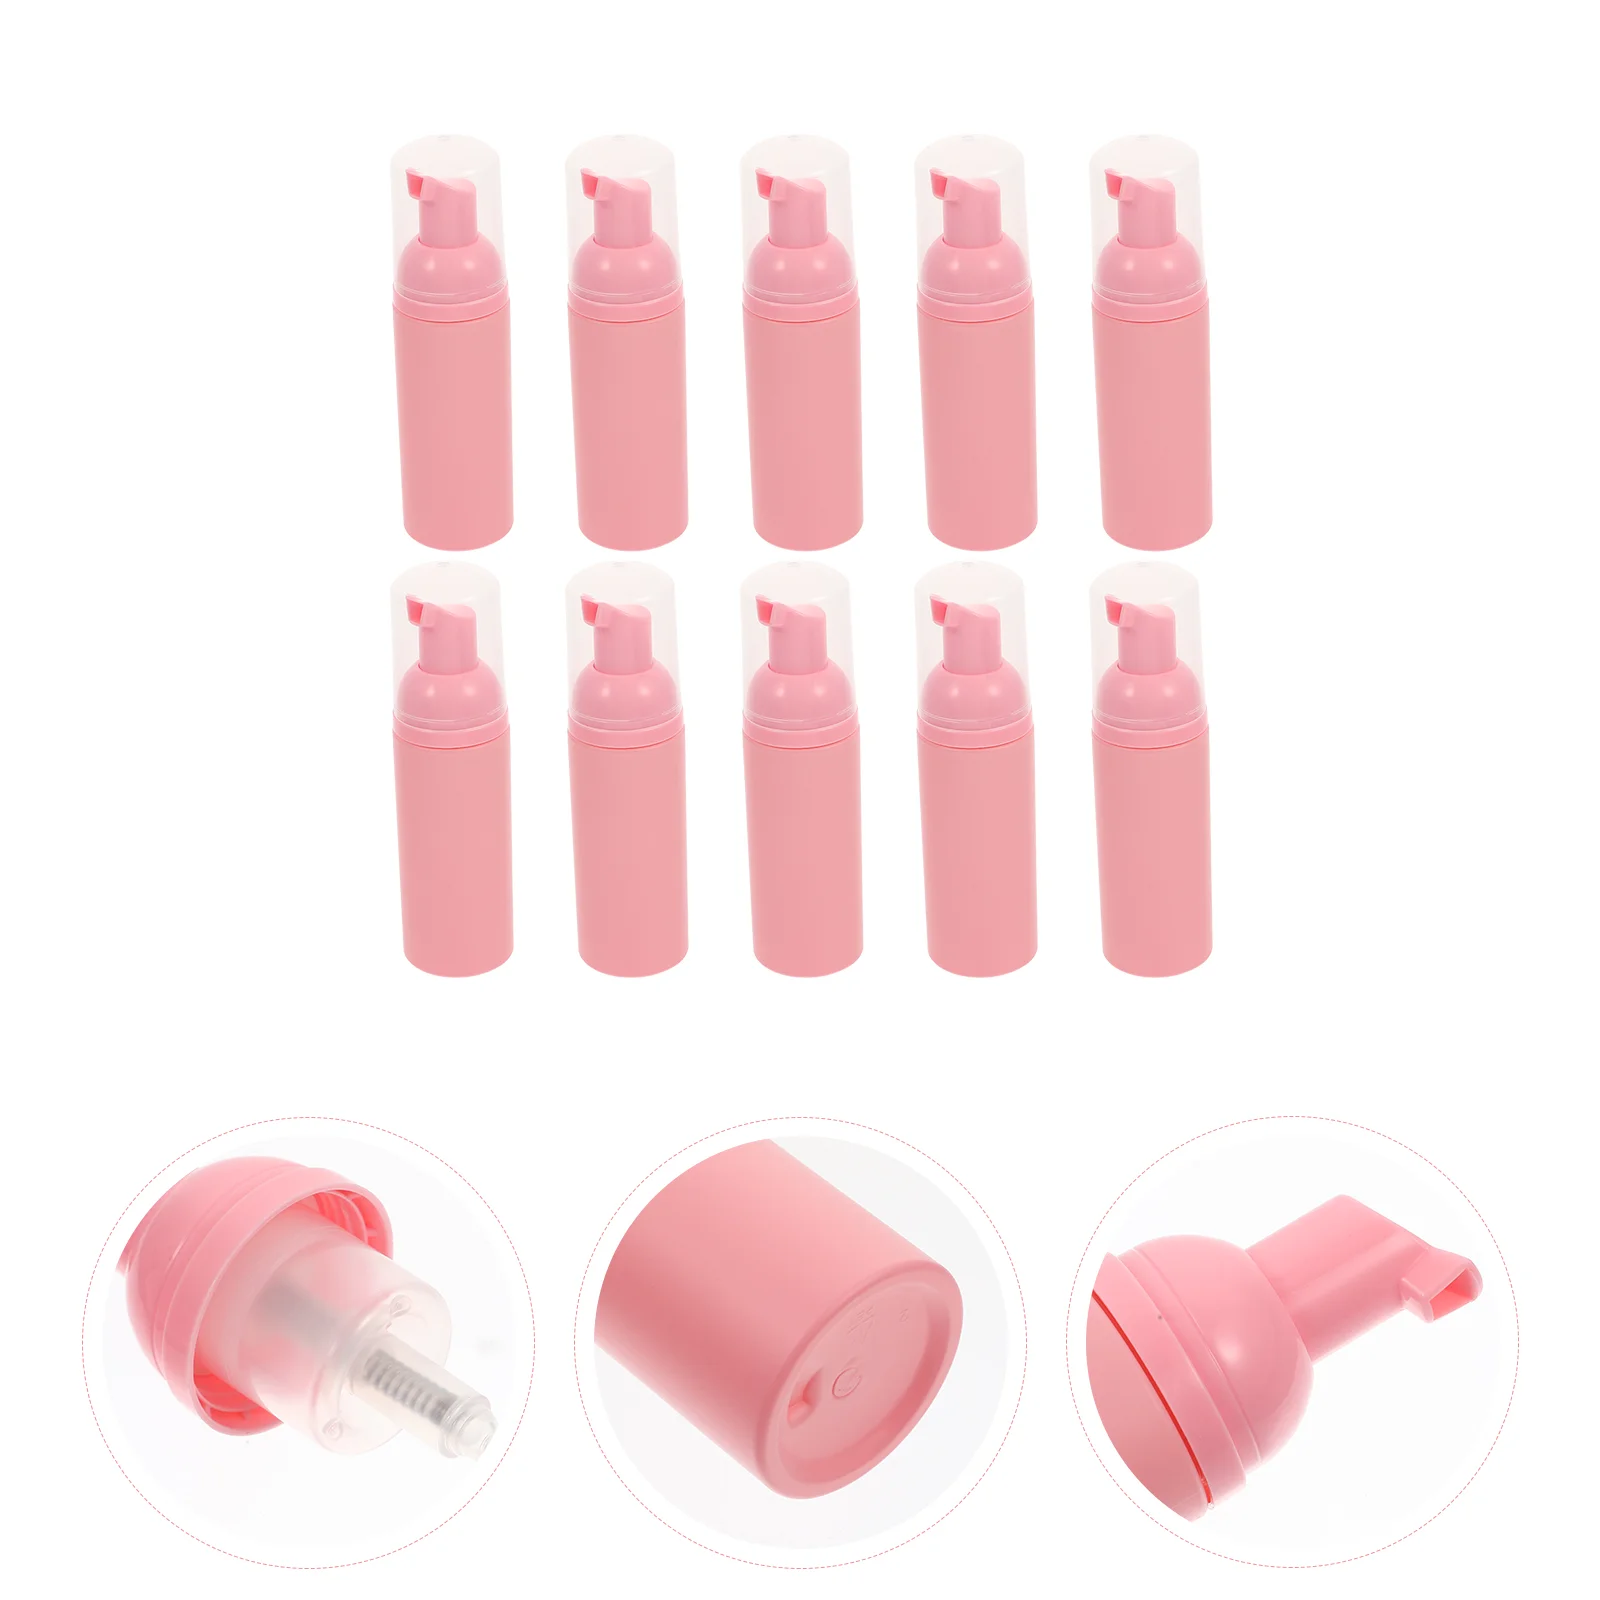 

10 Pcs Push Sparkling Bottle Pink Soap Dispenser Refillable Travel Bottles Foaming Pump Cleasing Milk The Pet Shower Foams